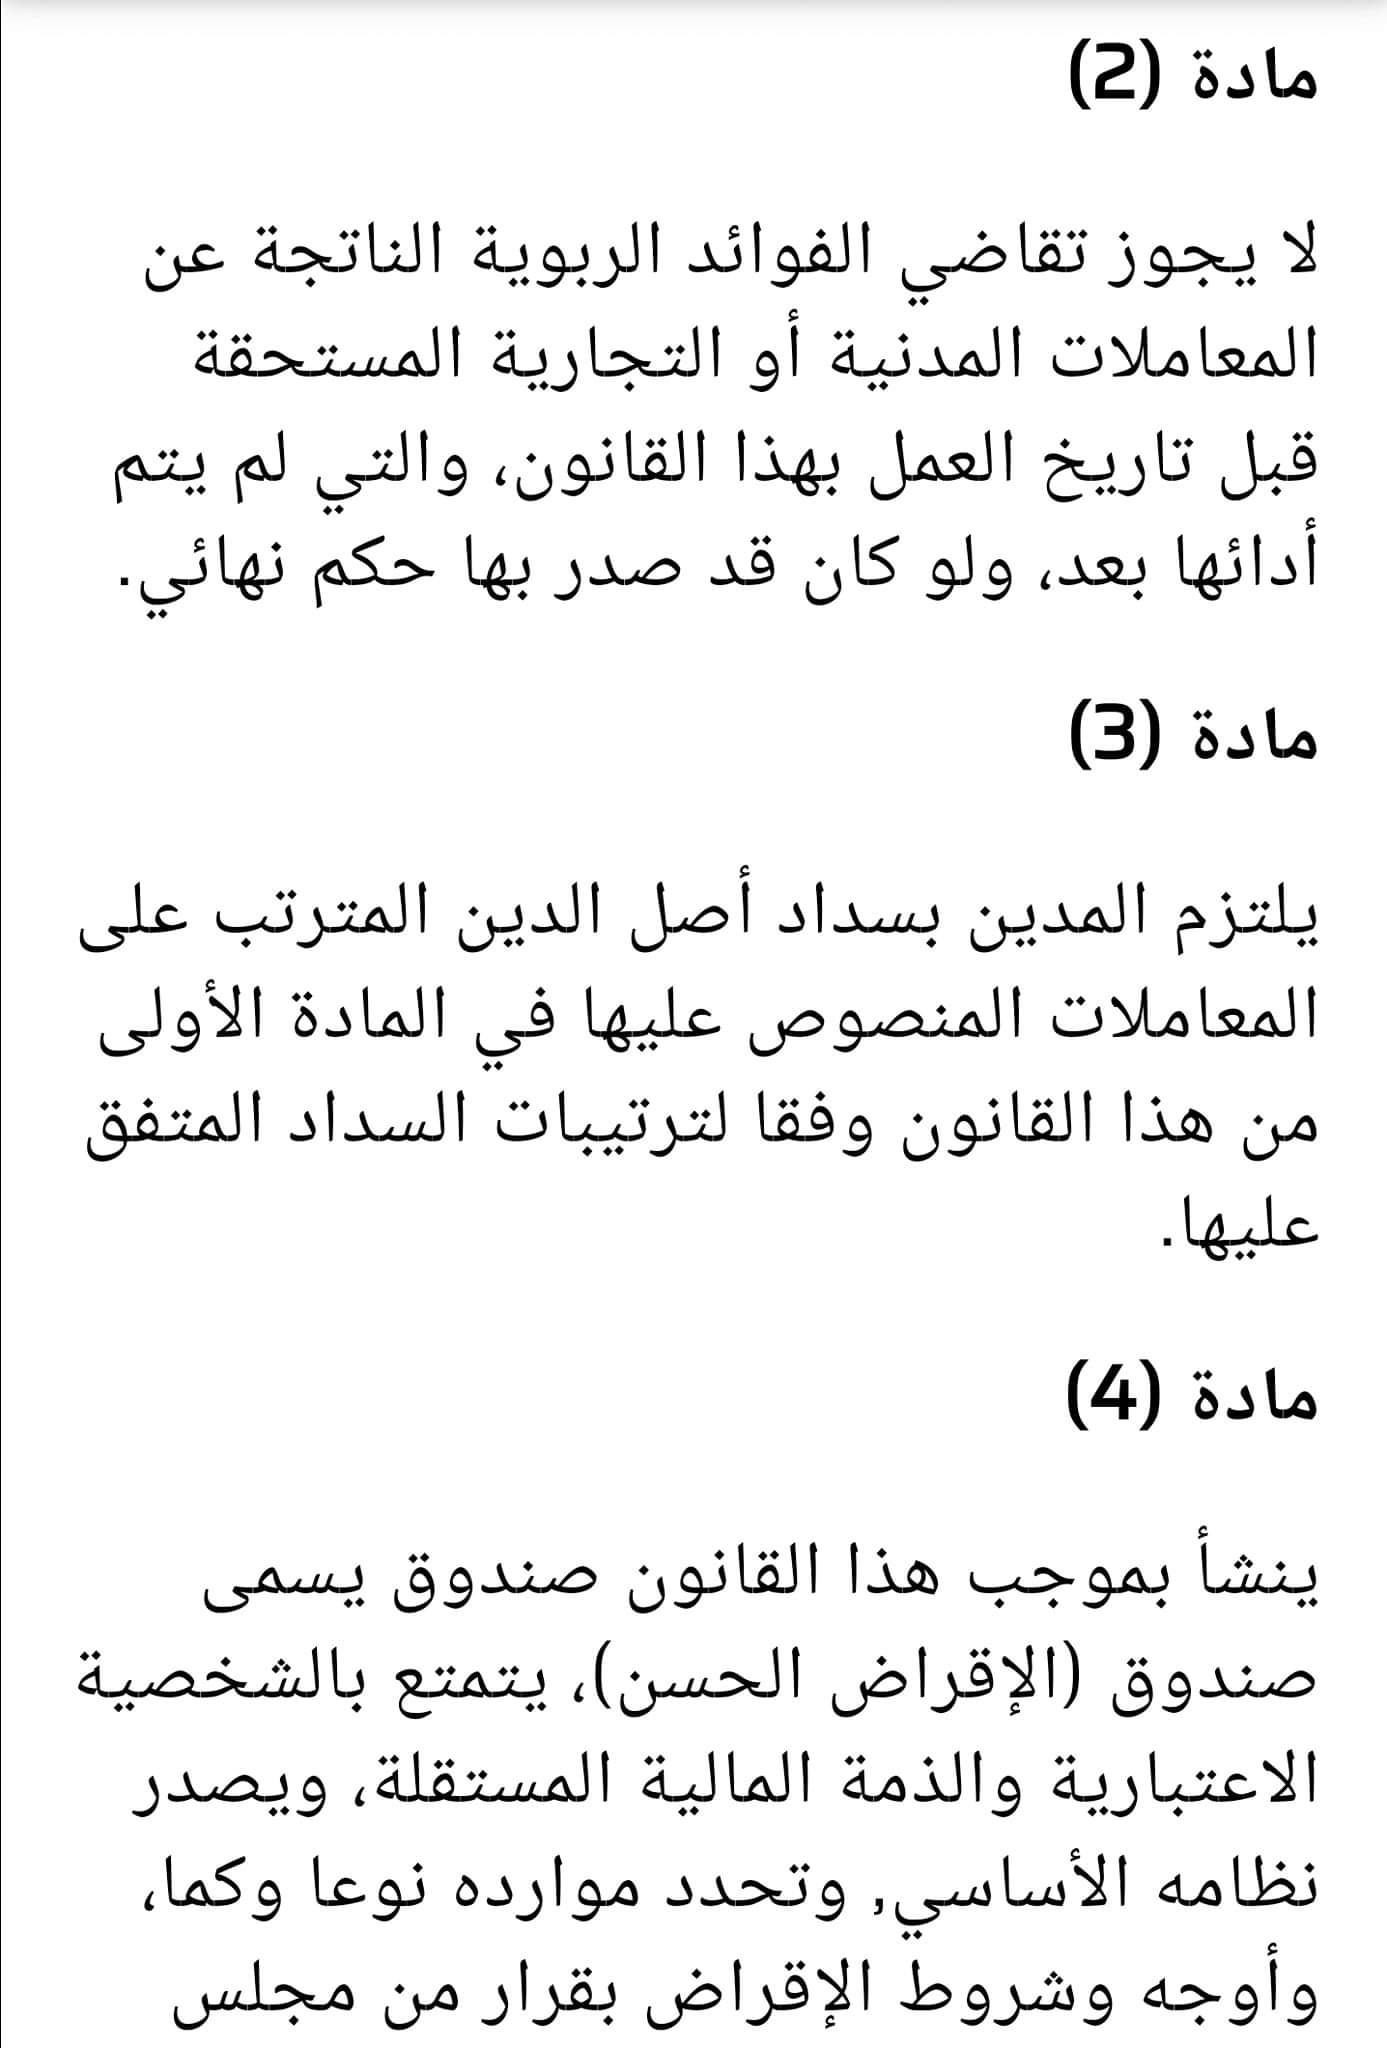 Libyan usury law3